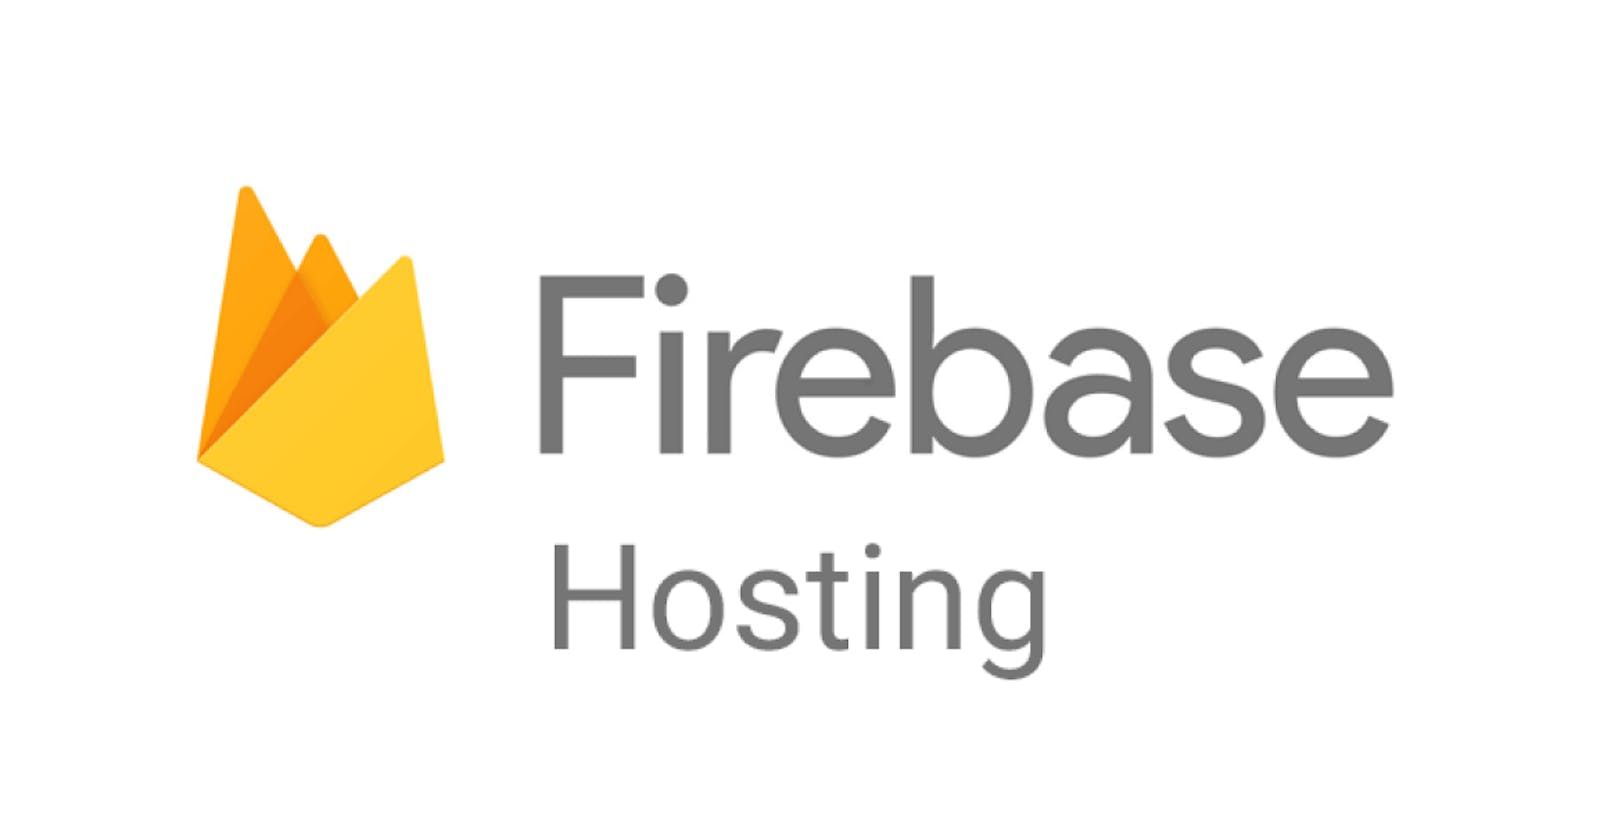 FREE Website with Google Firebase